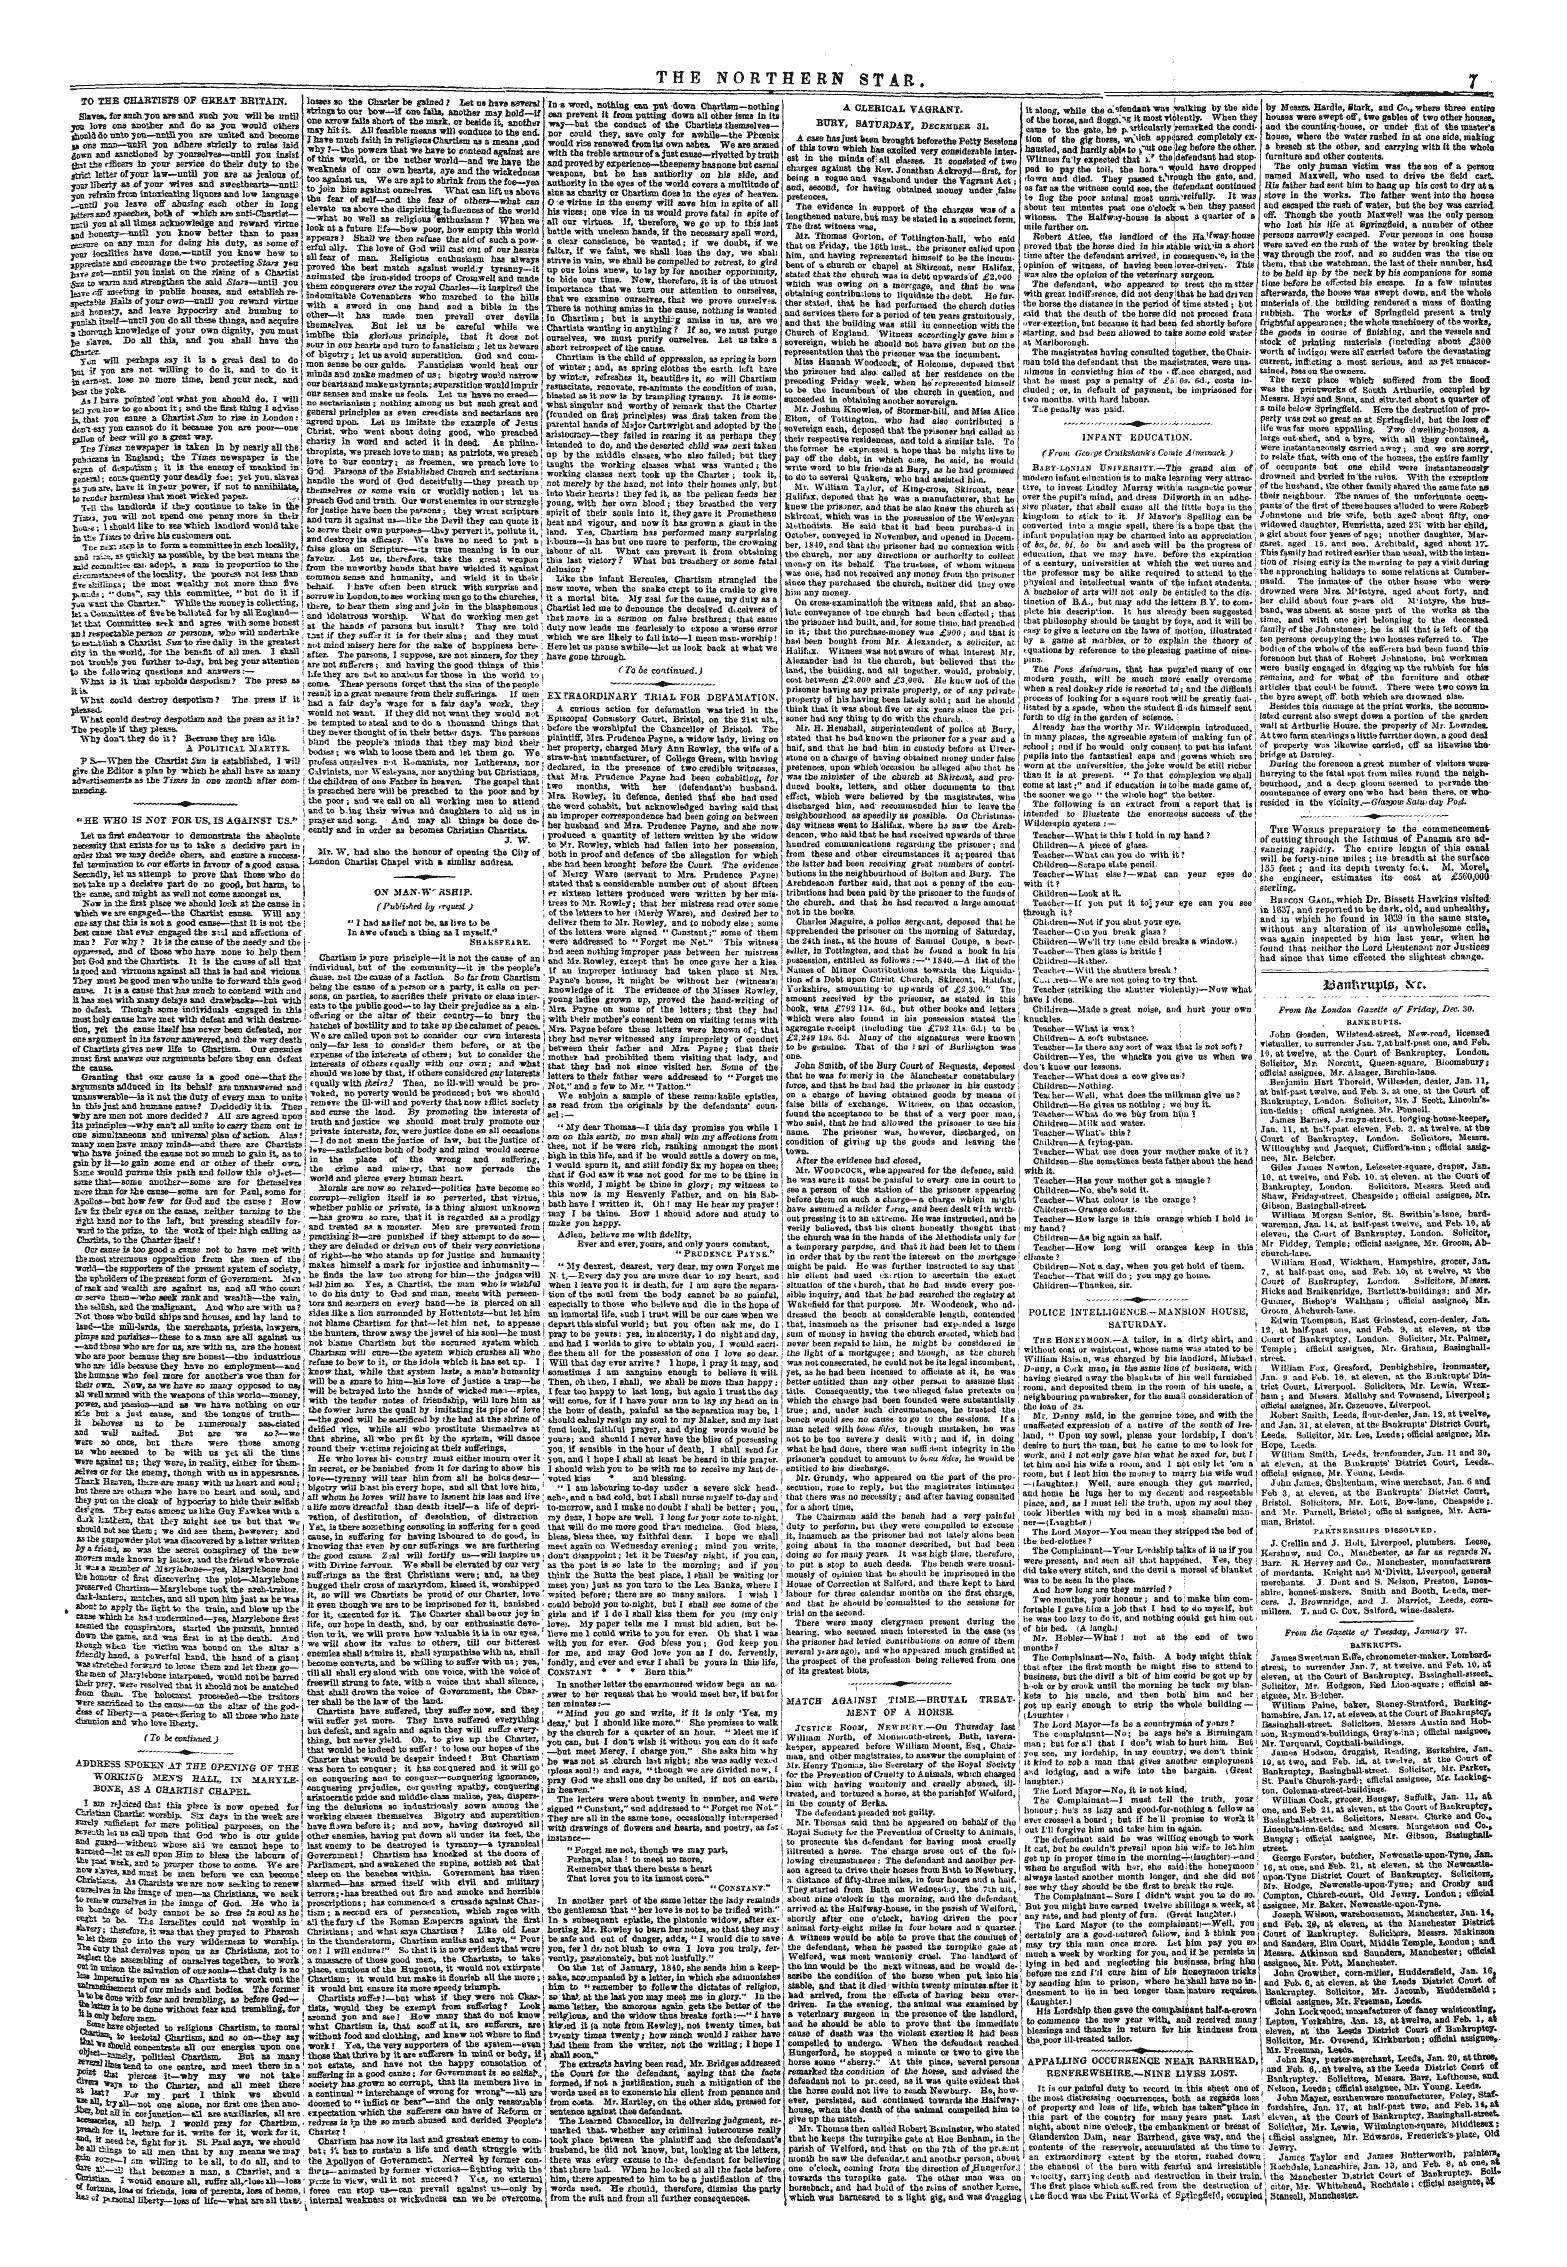 Northern Star (1837-1852): jS F Y, 4th edition: 7